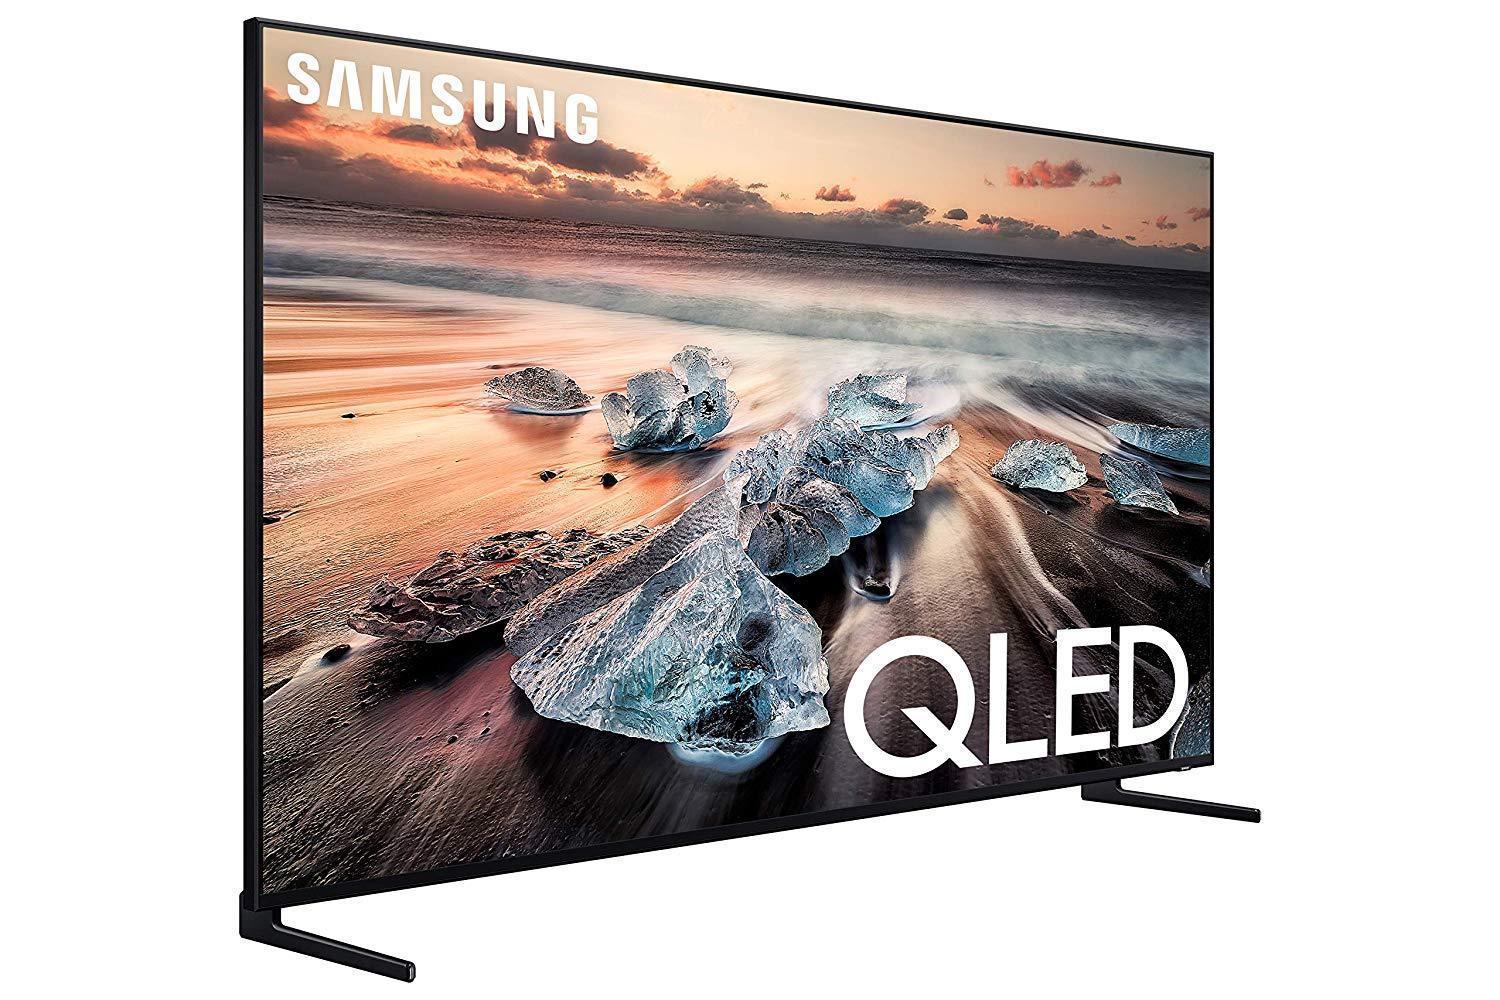 Samsung QN65Q900 Flat 65-Inch QLED 8K UHD Q900 Series Smart TV